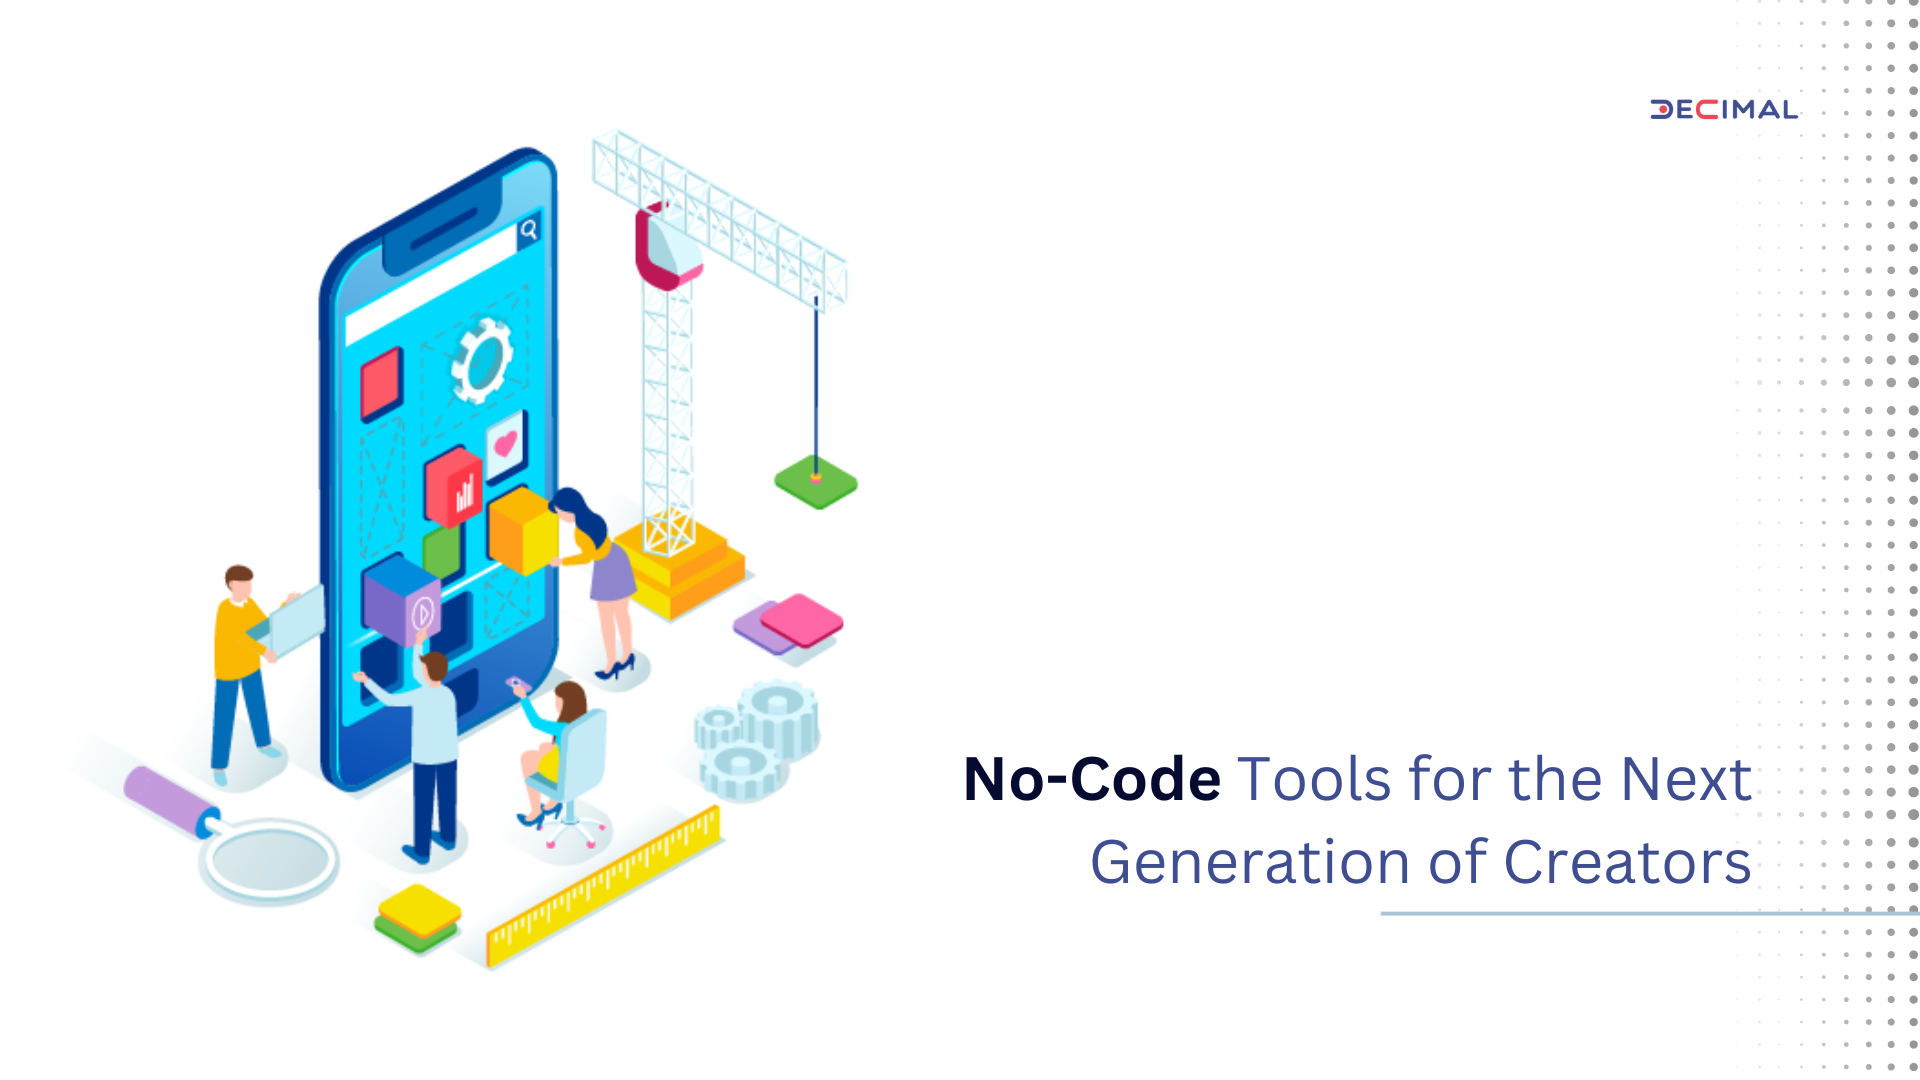 No-Code Tools for the Next Generation of Creators